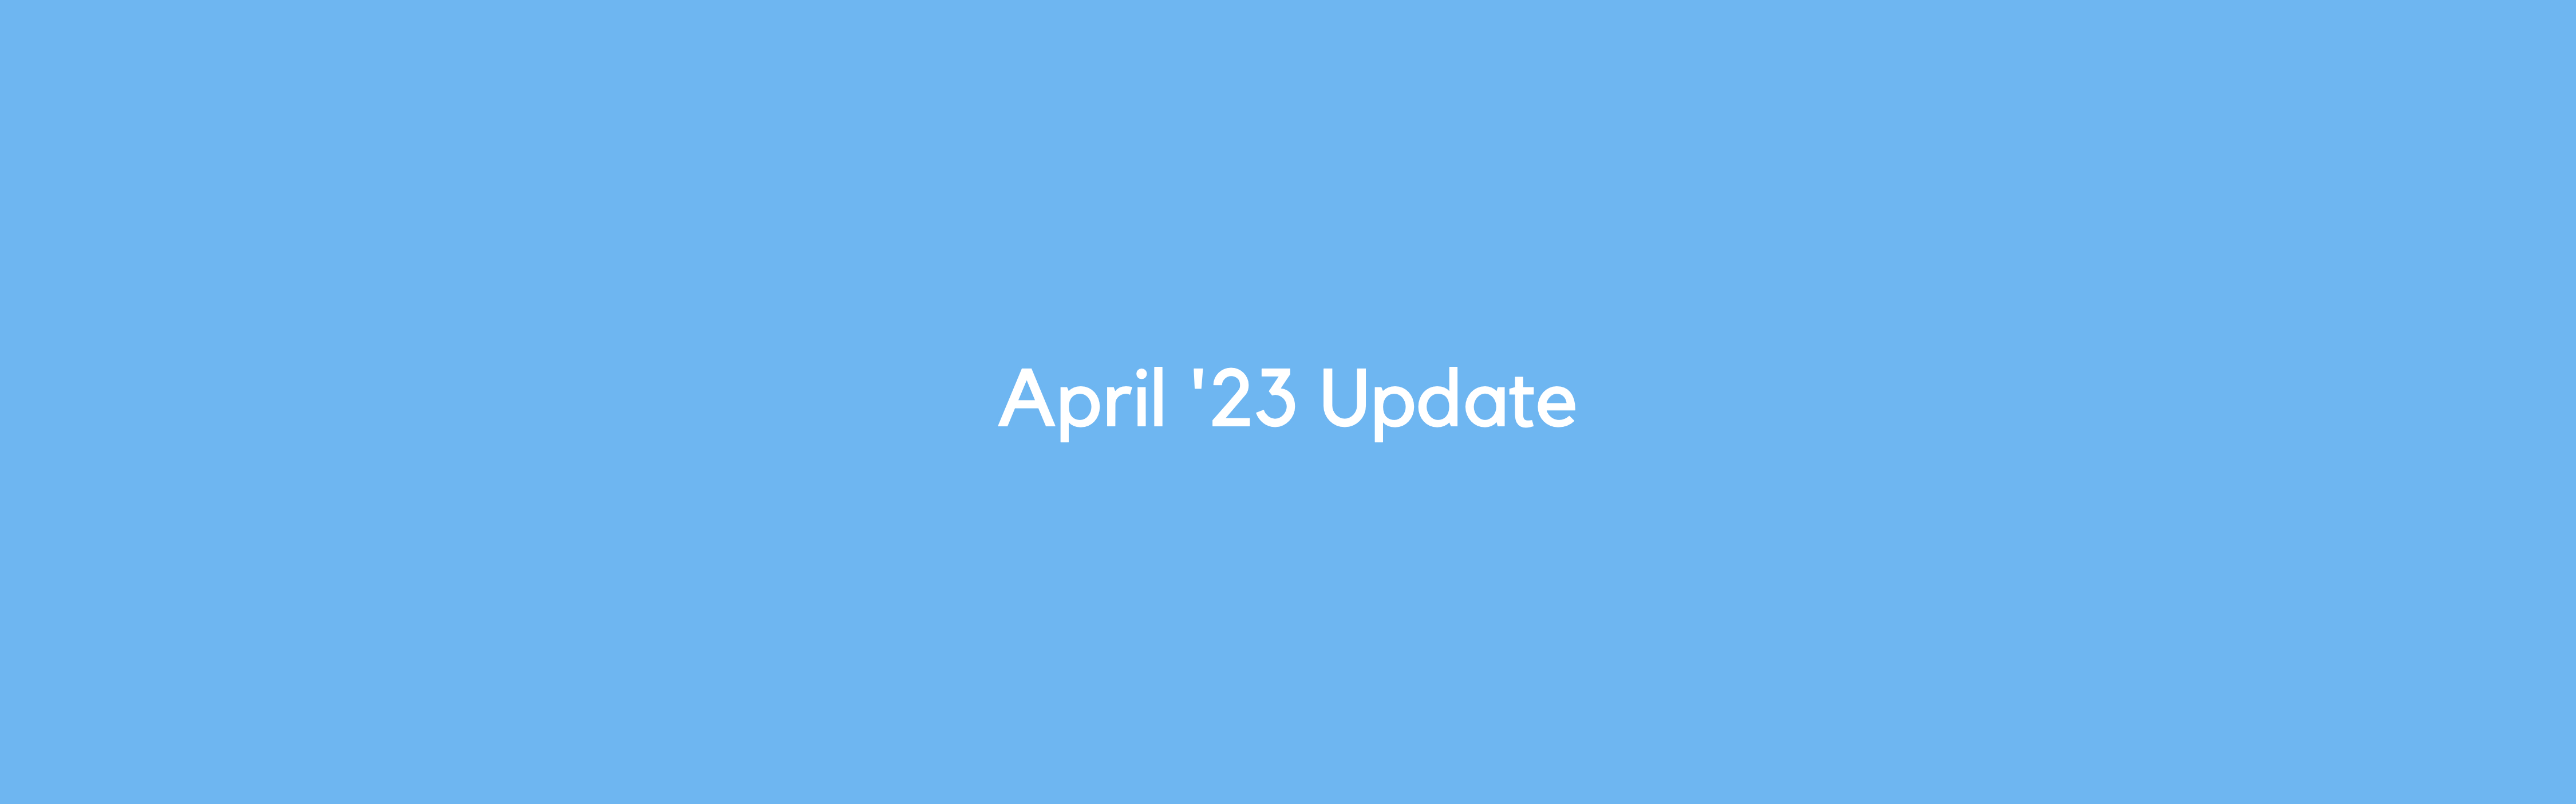 April-23-Update